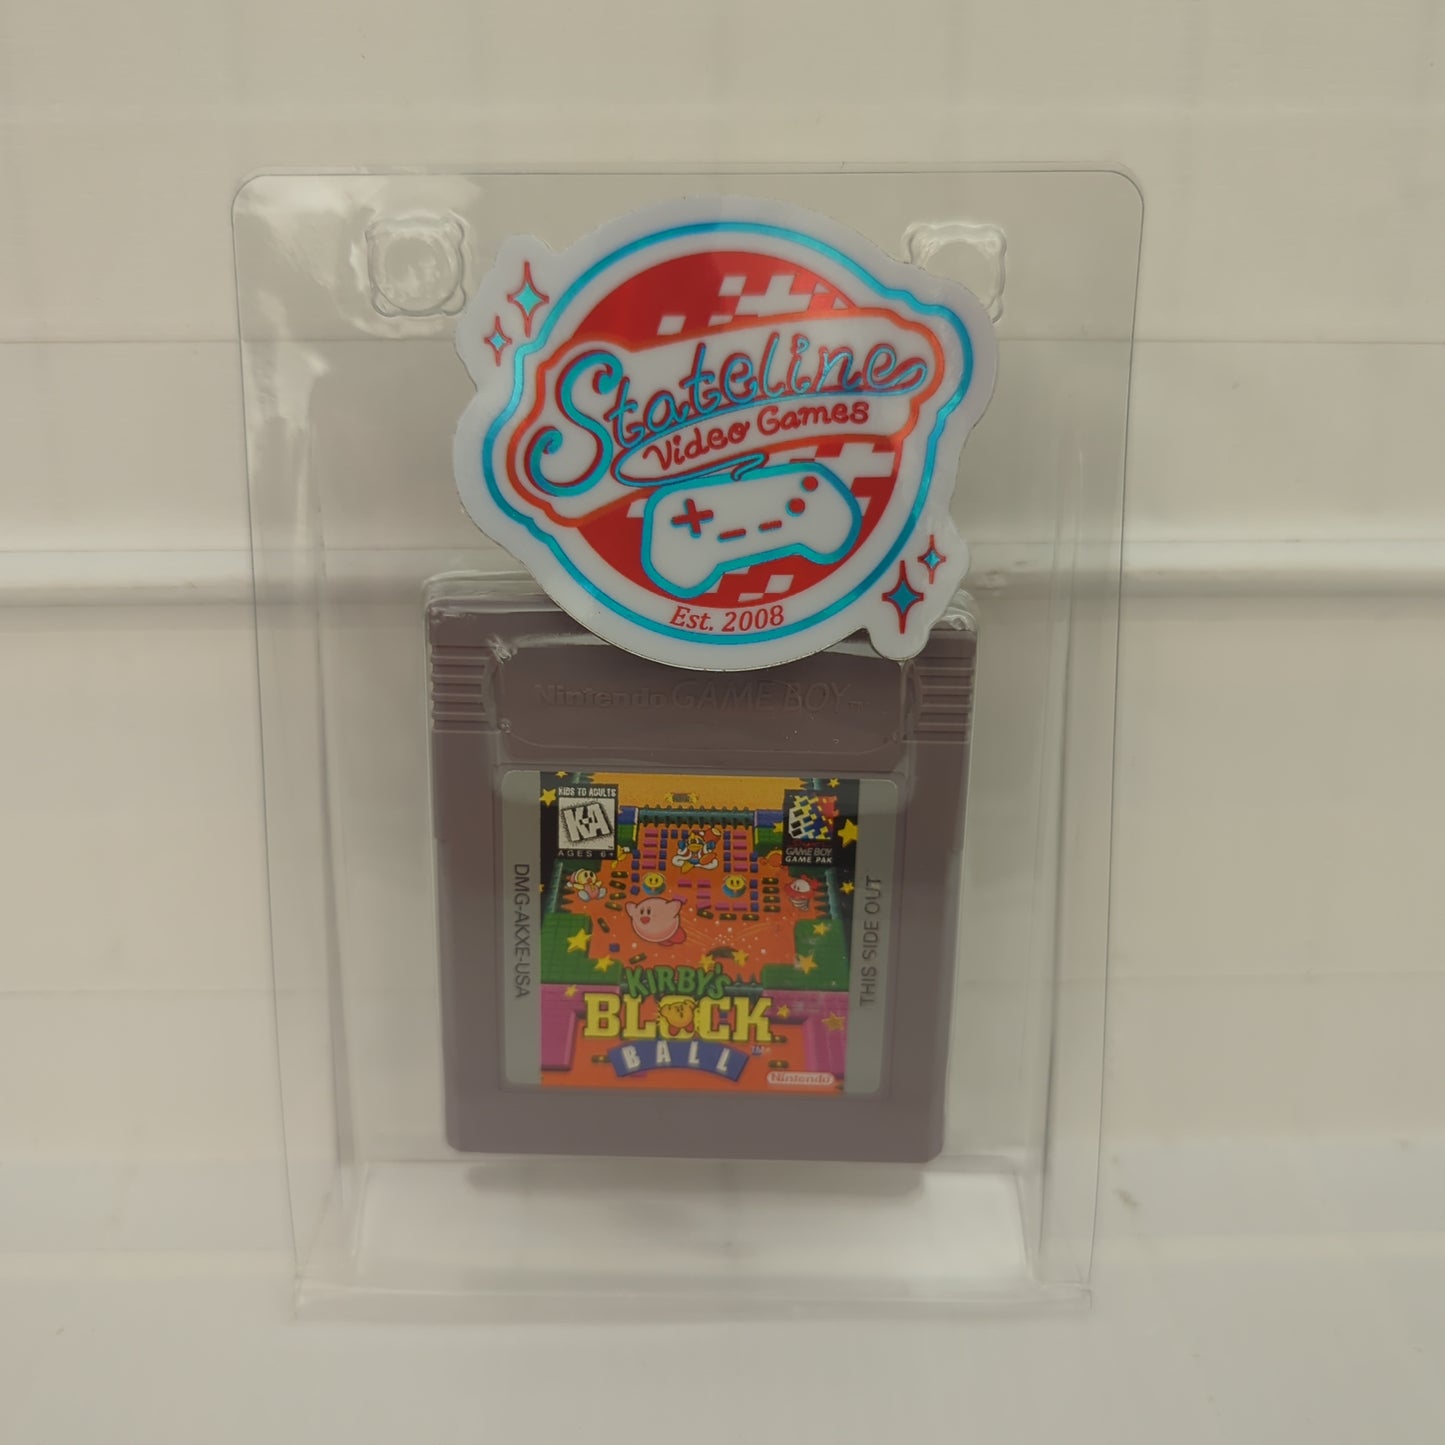 Kirby's Block Ball - GameBoy